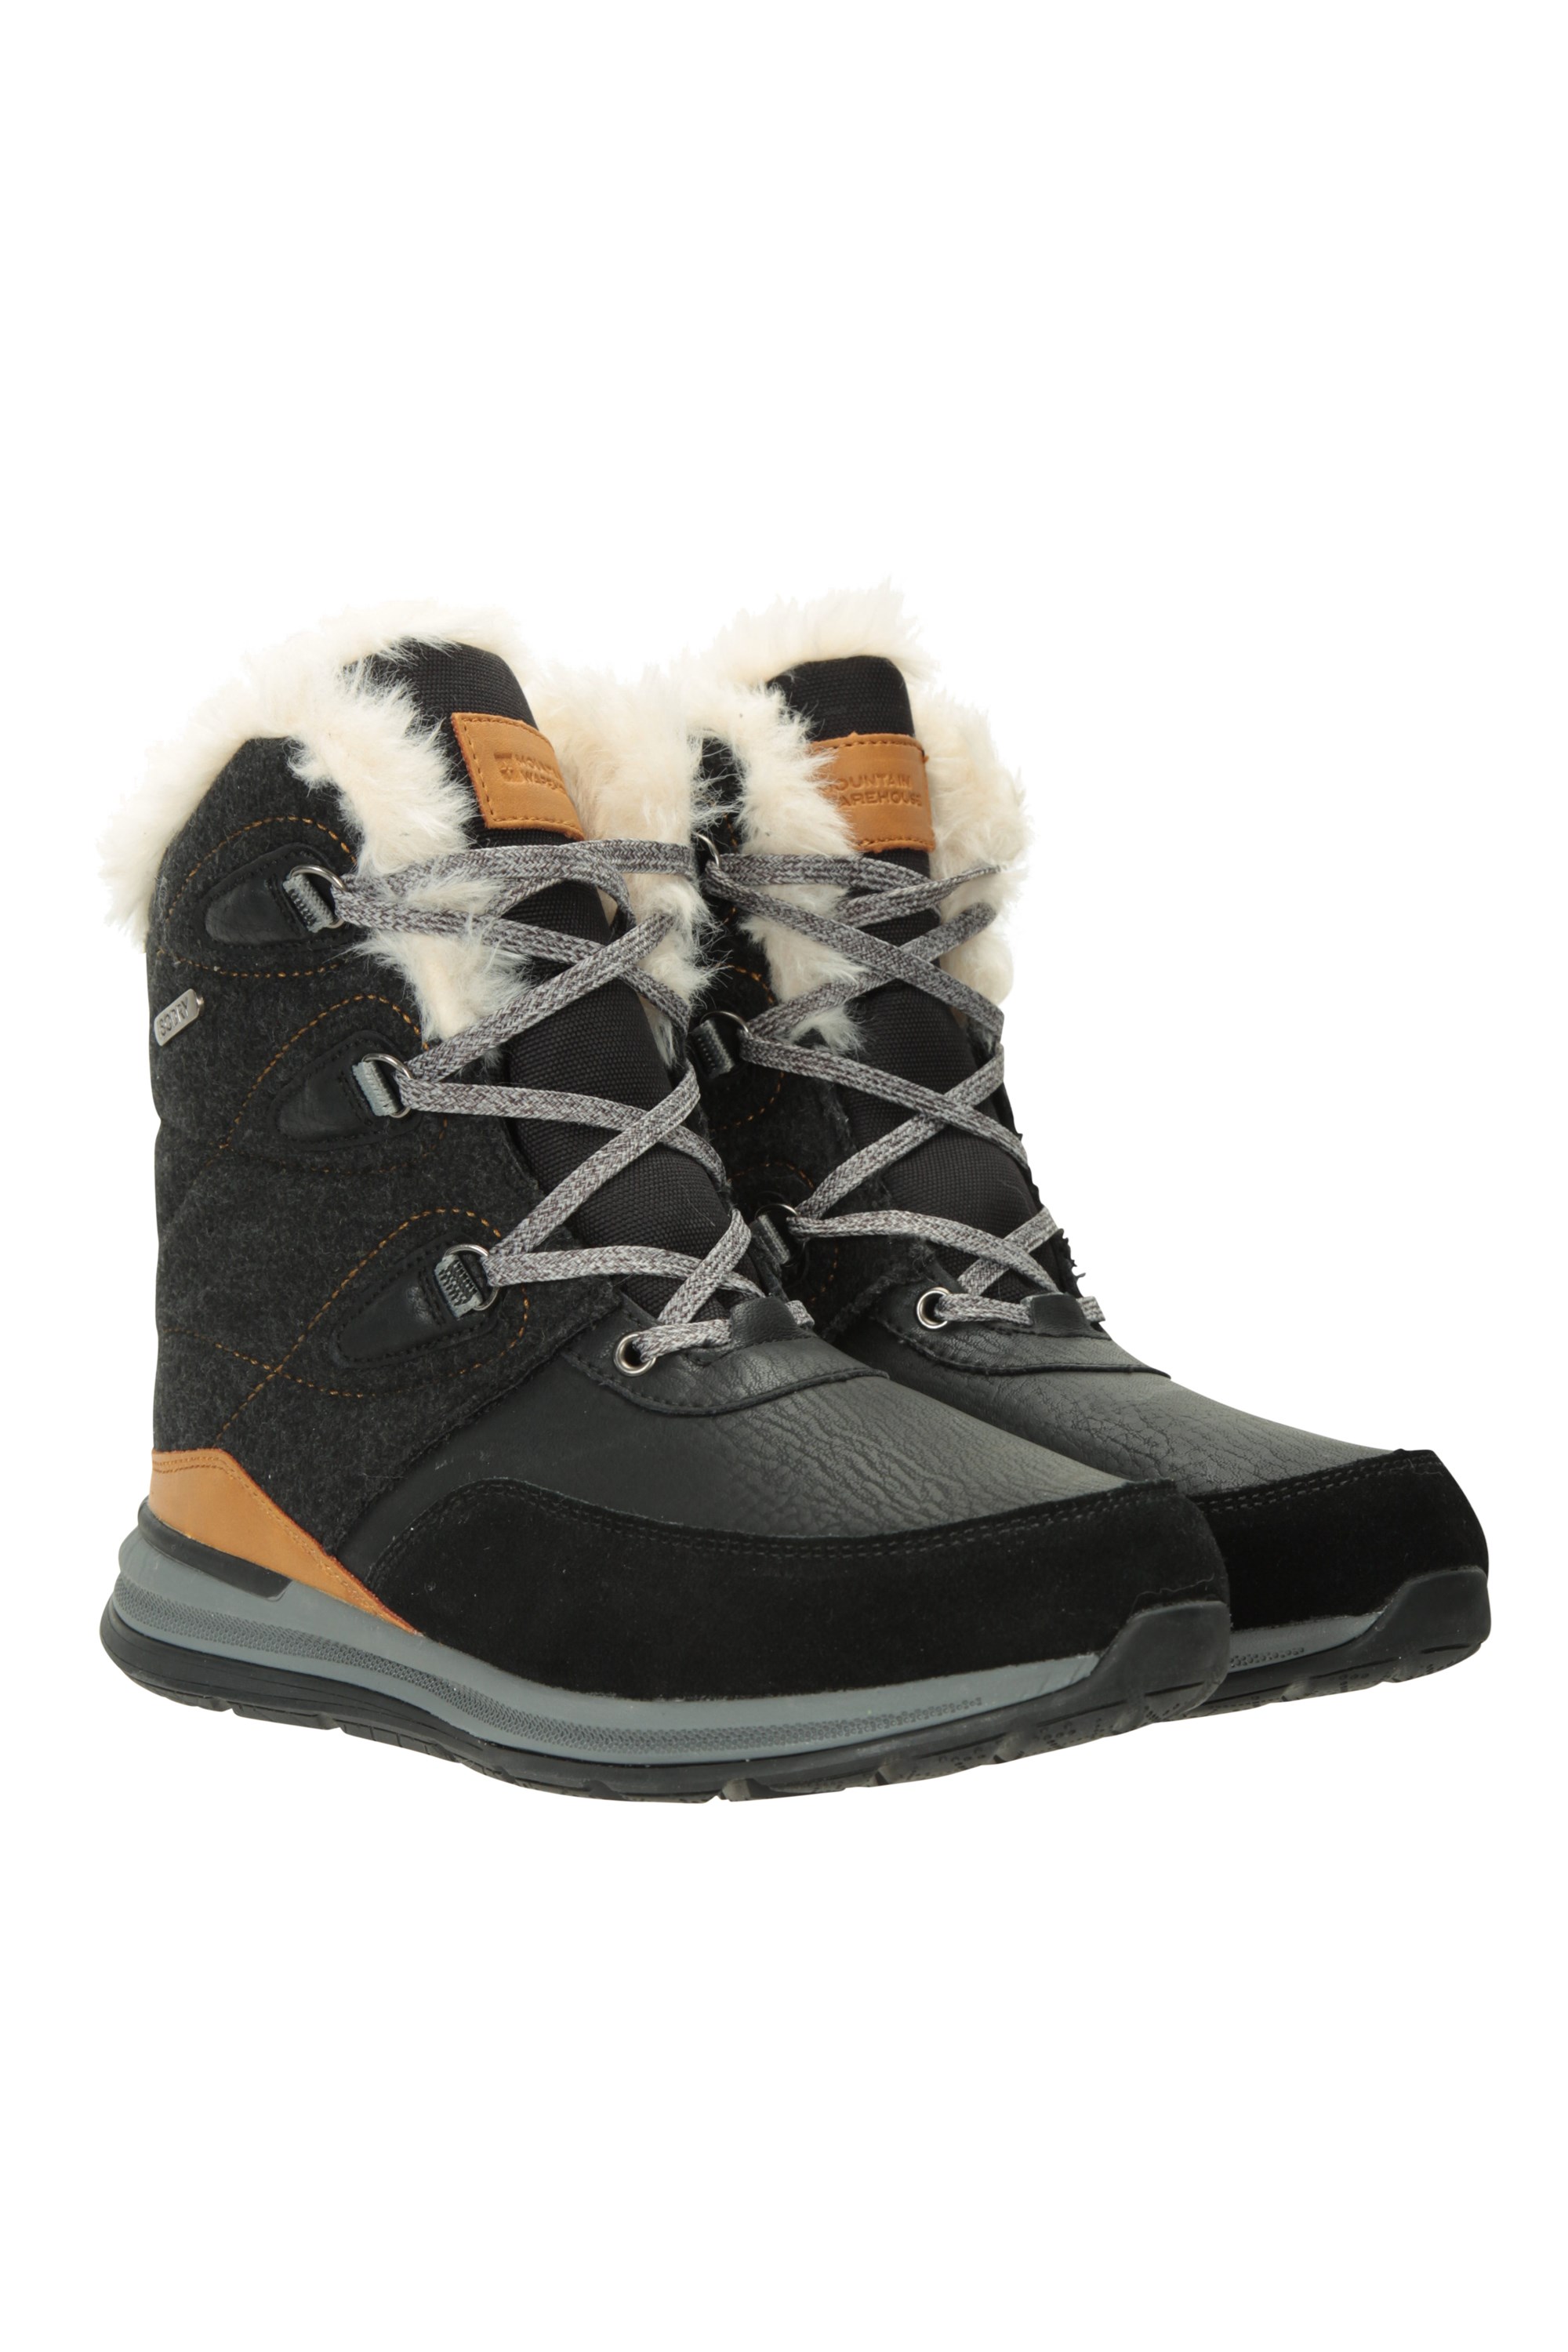 Women's Waterproof Winter Snow Boots 